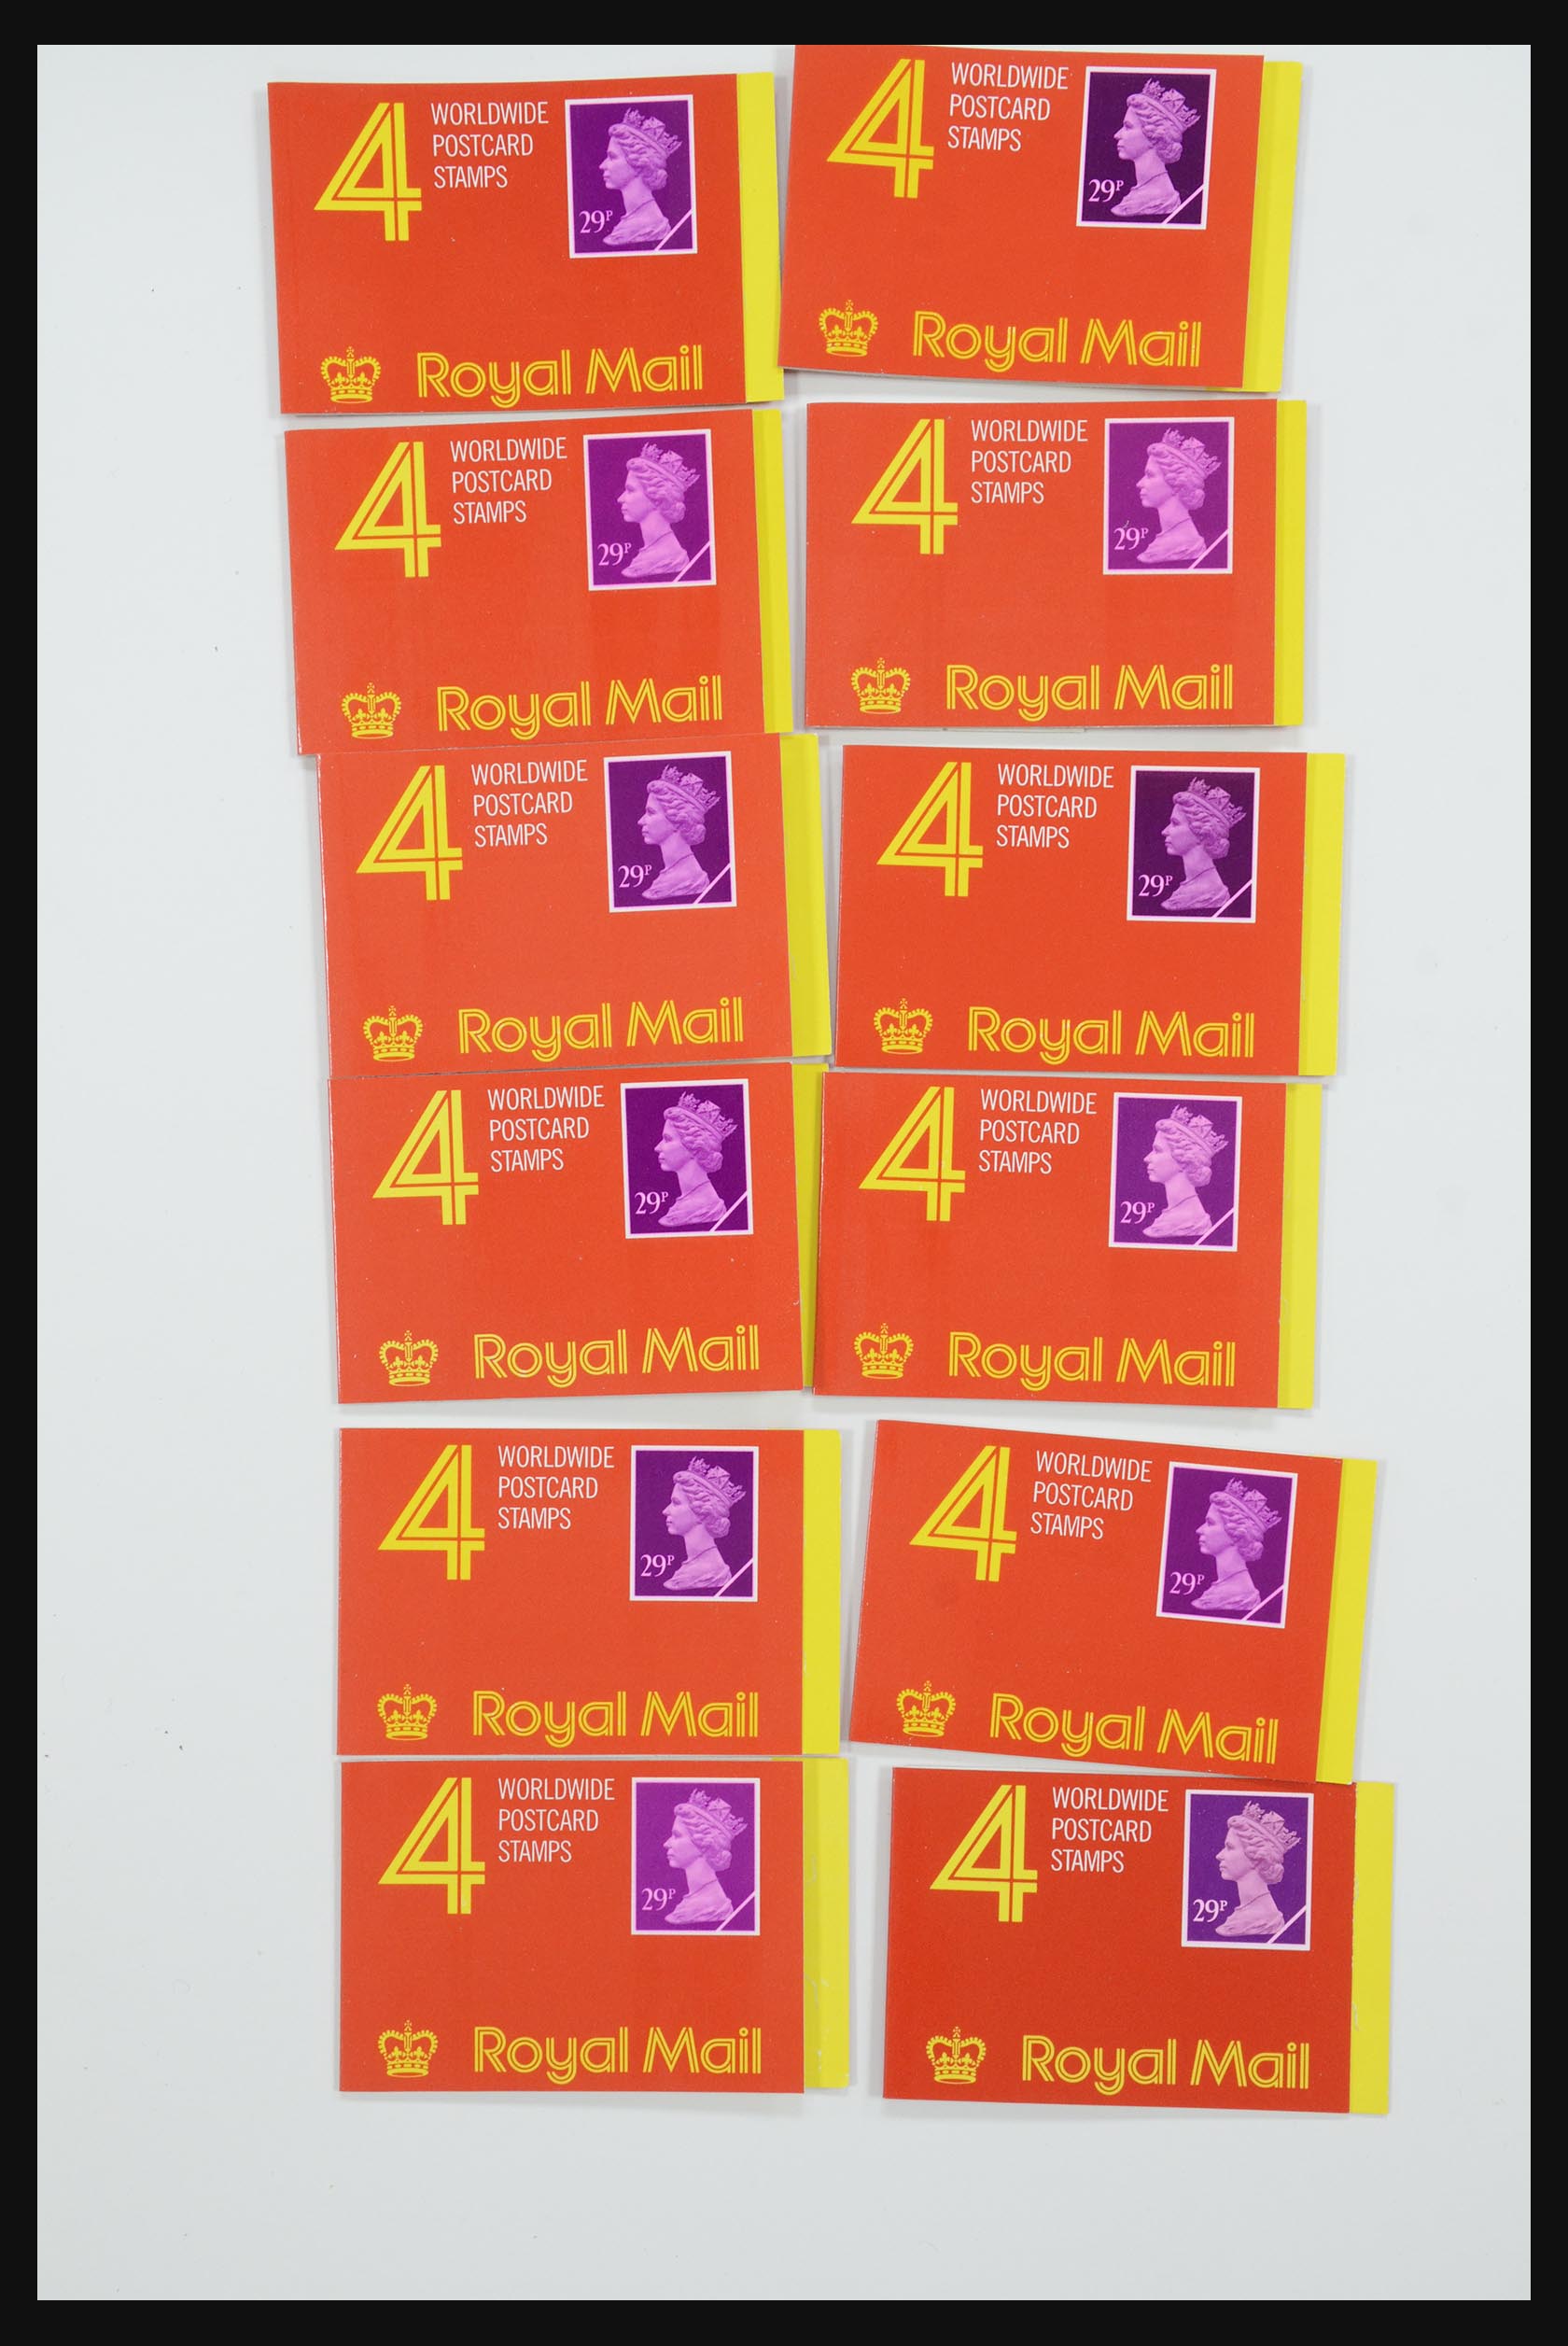 31961 074 - 31961 Great Britain stampbooklets 1971-1999.